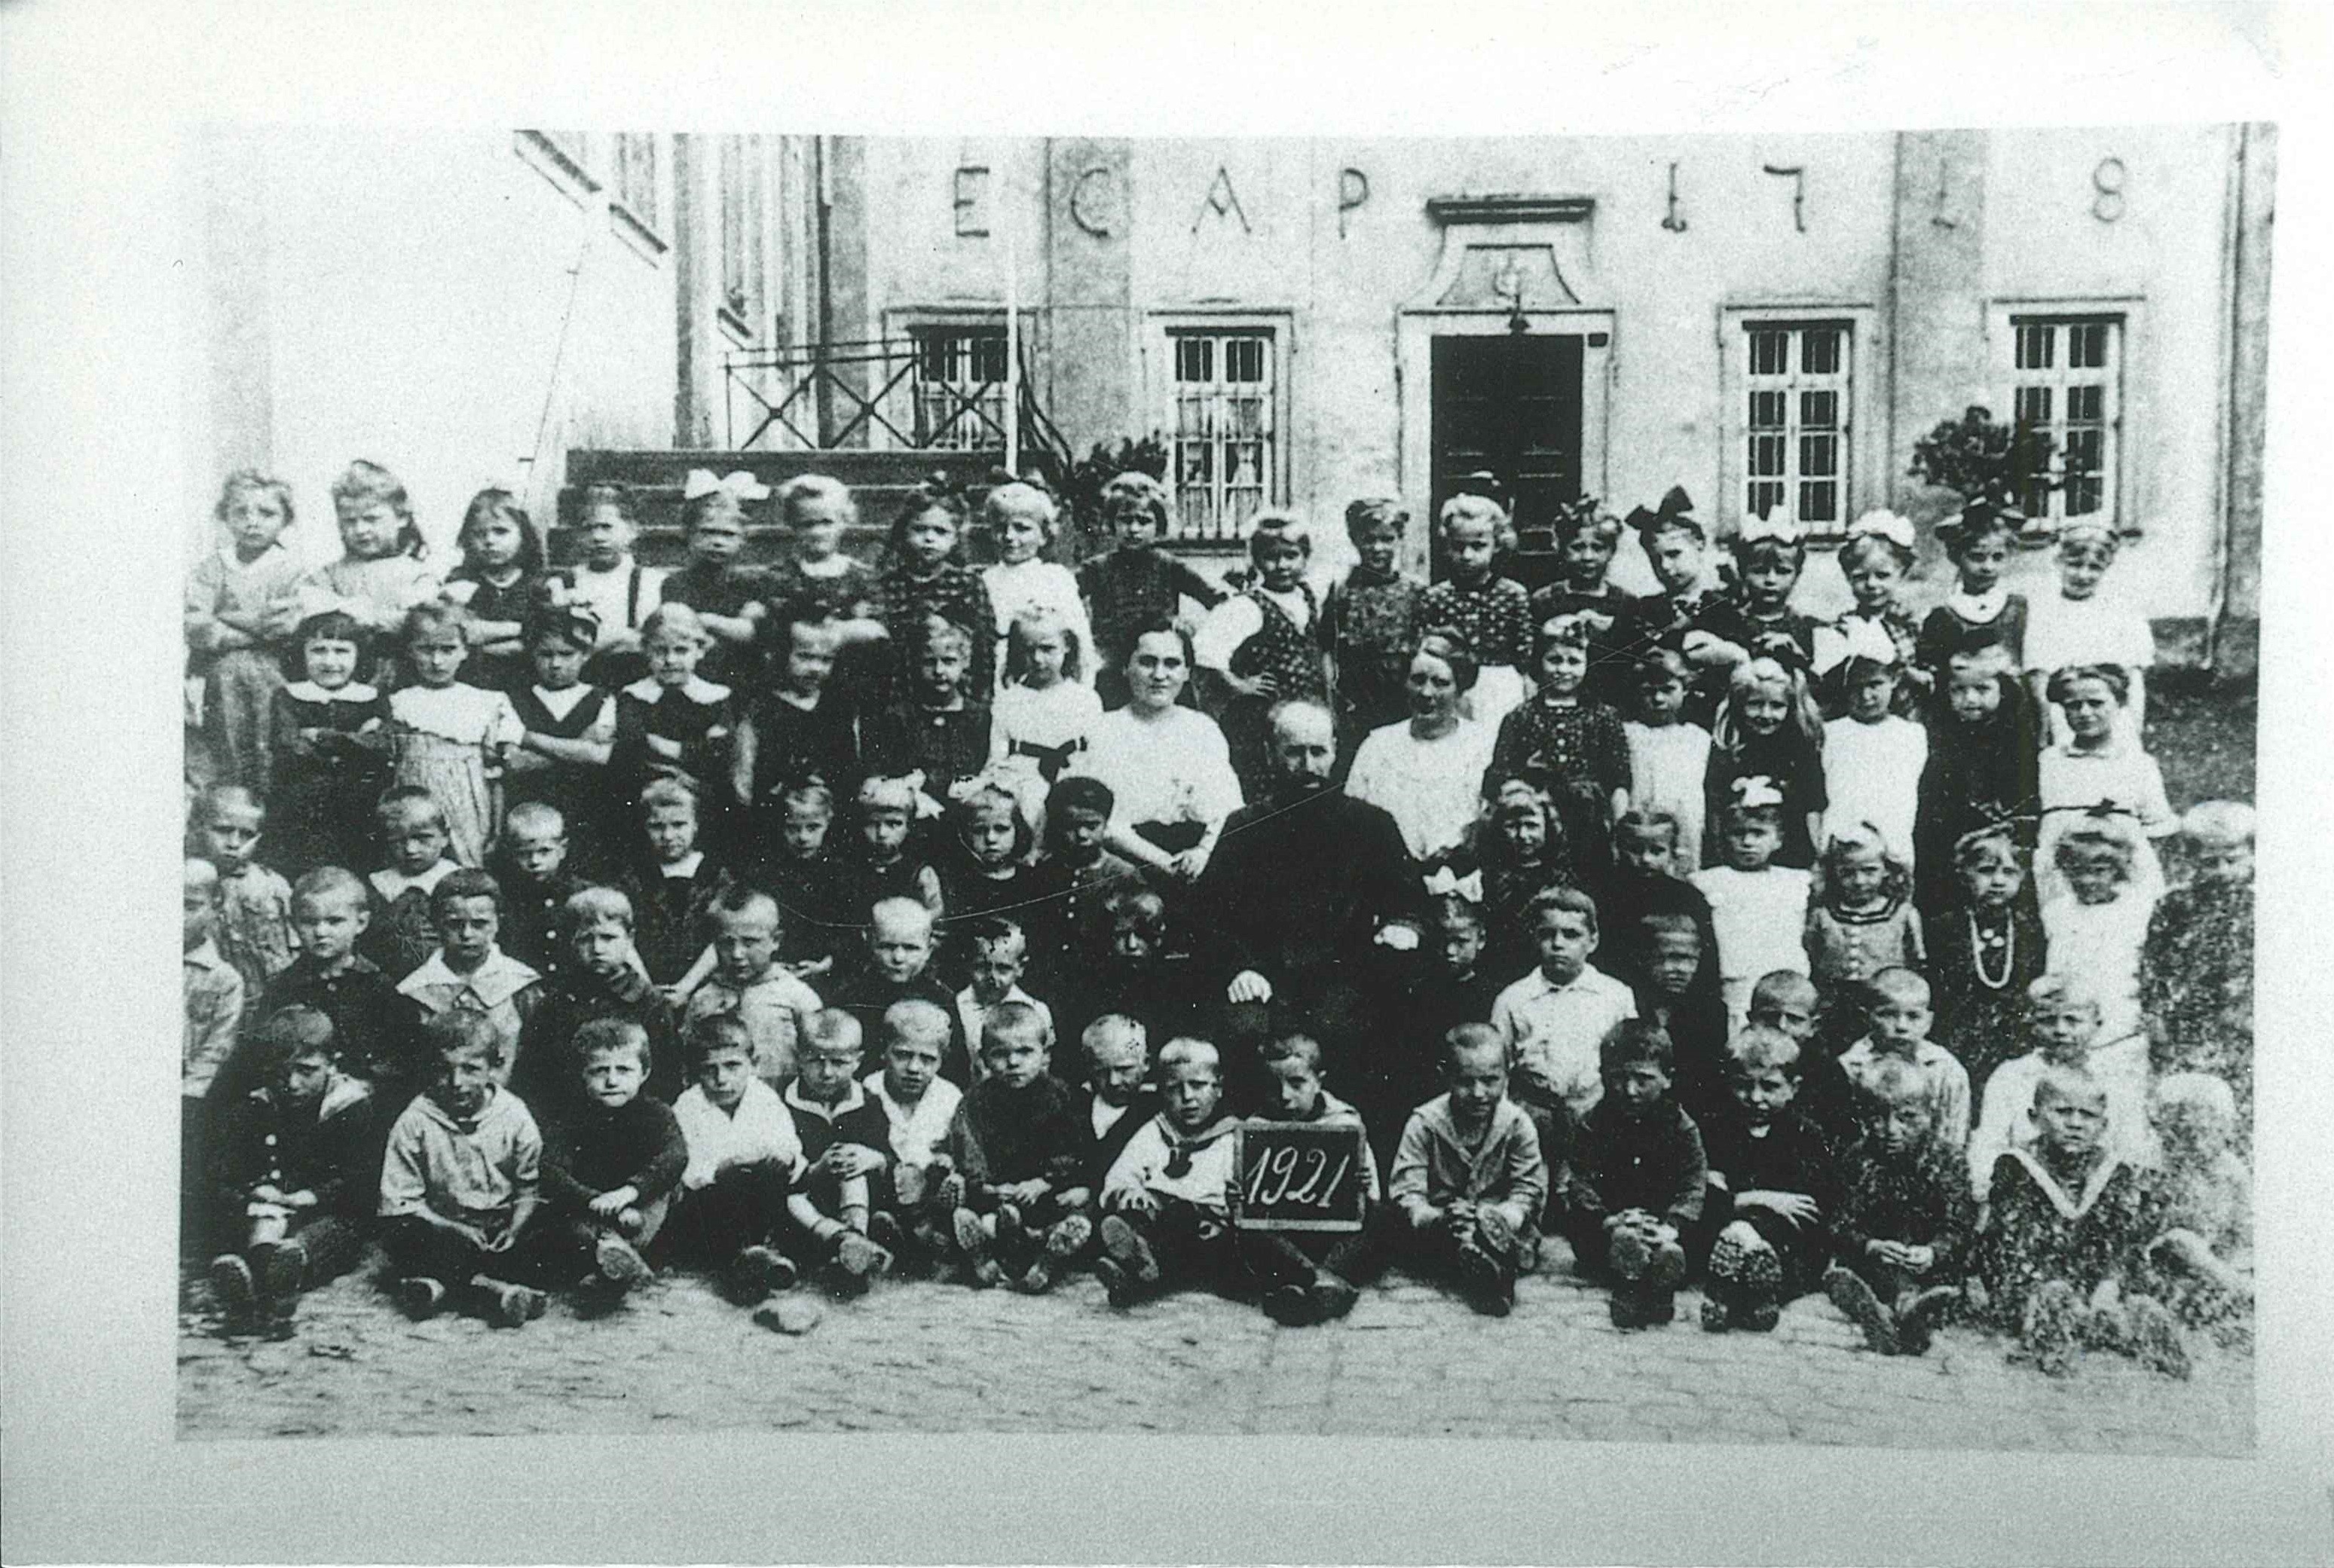 Klassenfoto, ehemalige katholische Schule im Abteigebäude, Sayn, 1921 (REM CC BY-NC-SA)